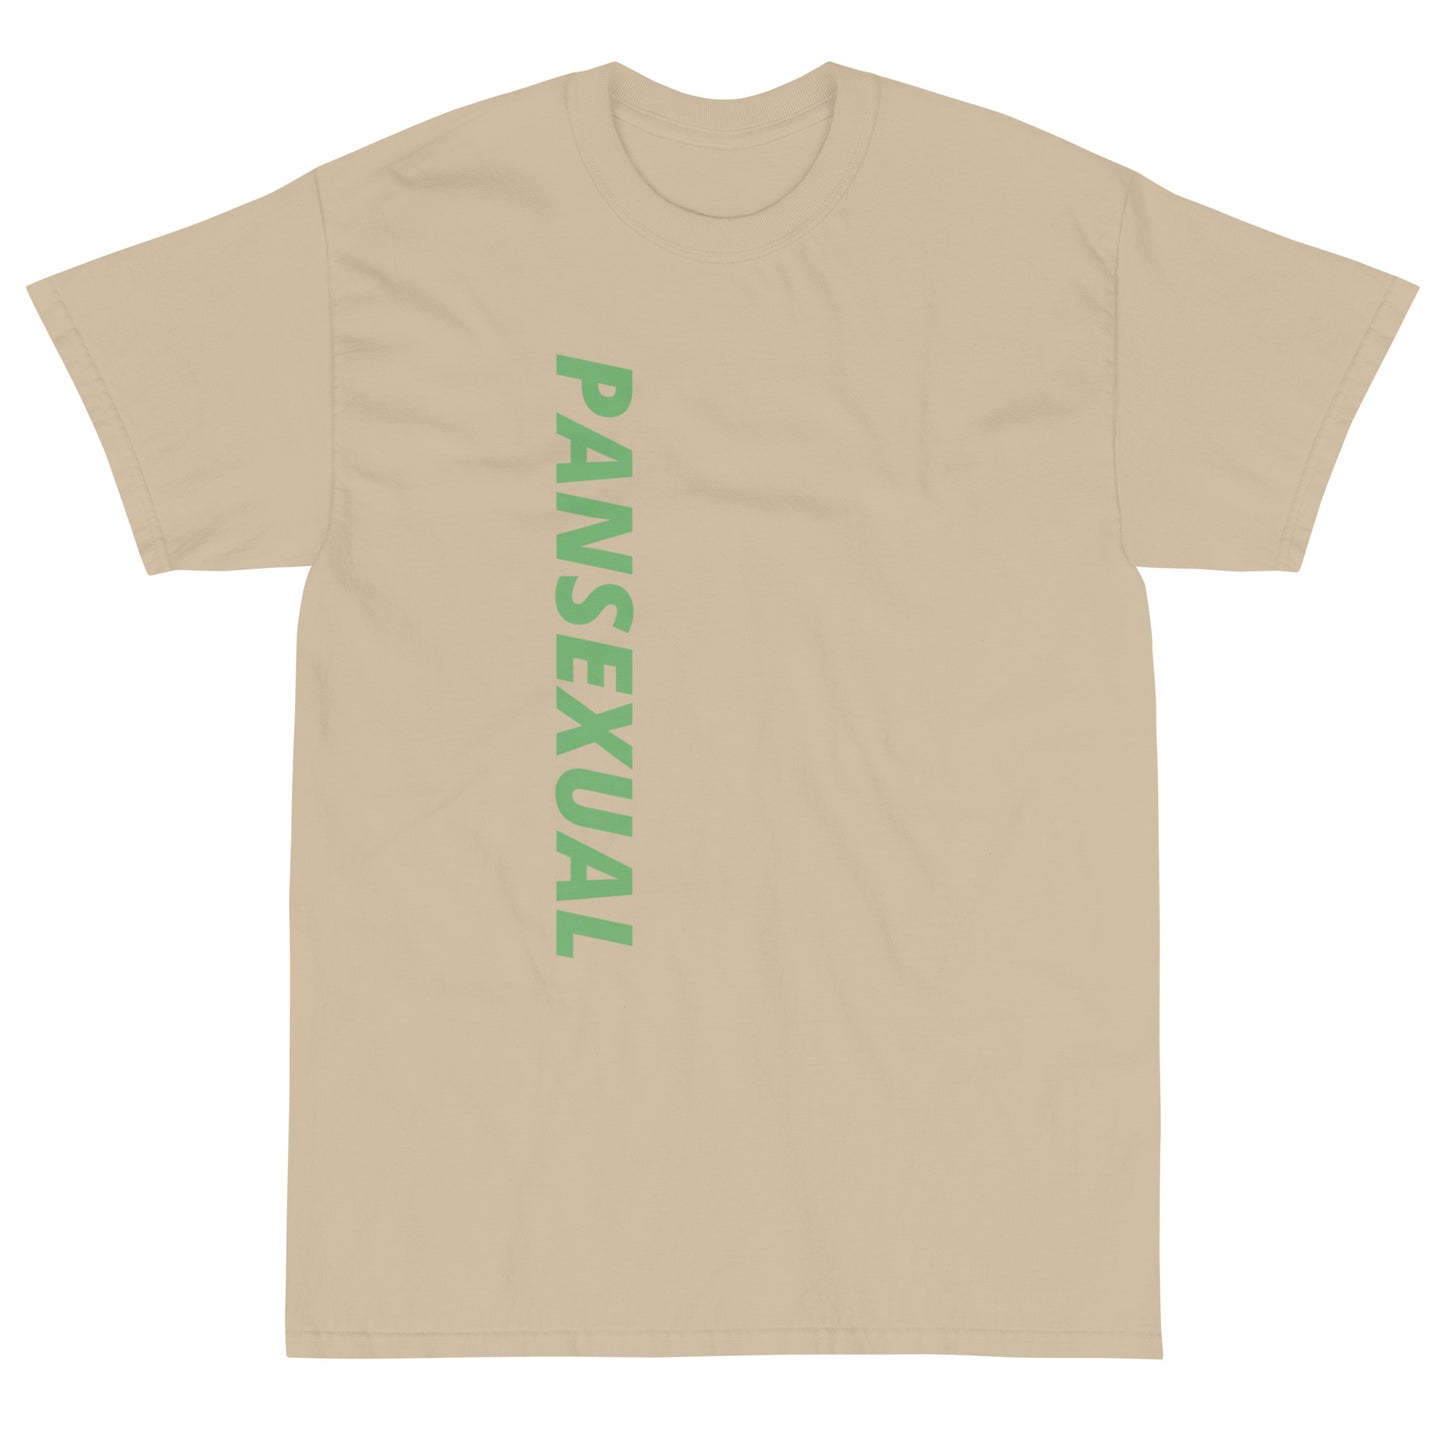 "Pansexual" Short Sleeve T-Shirt